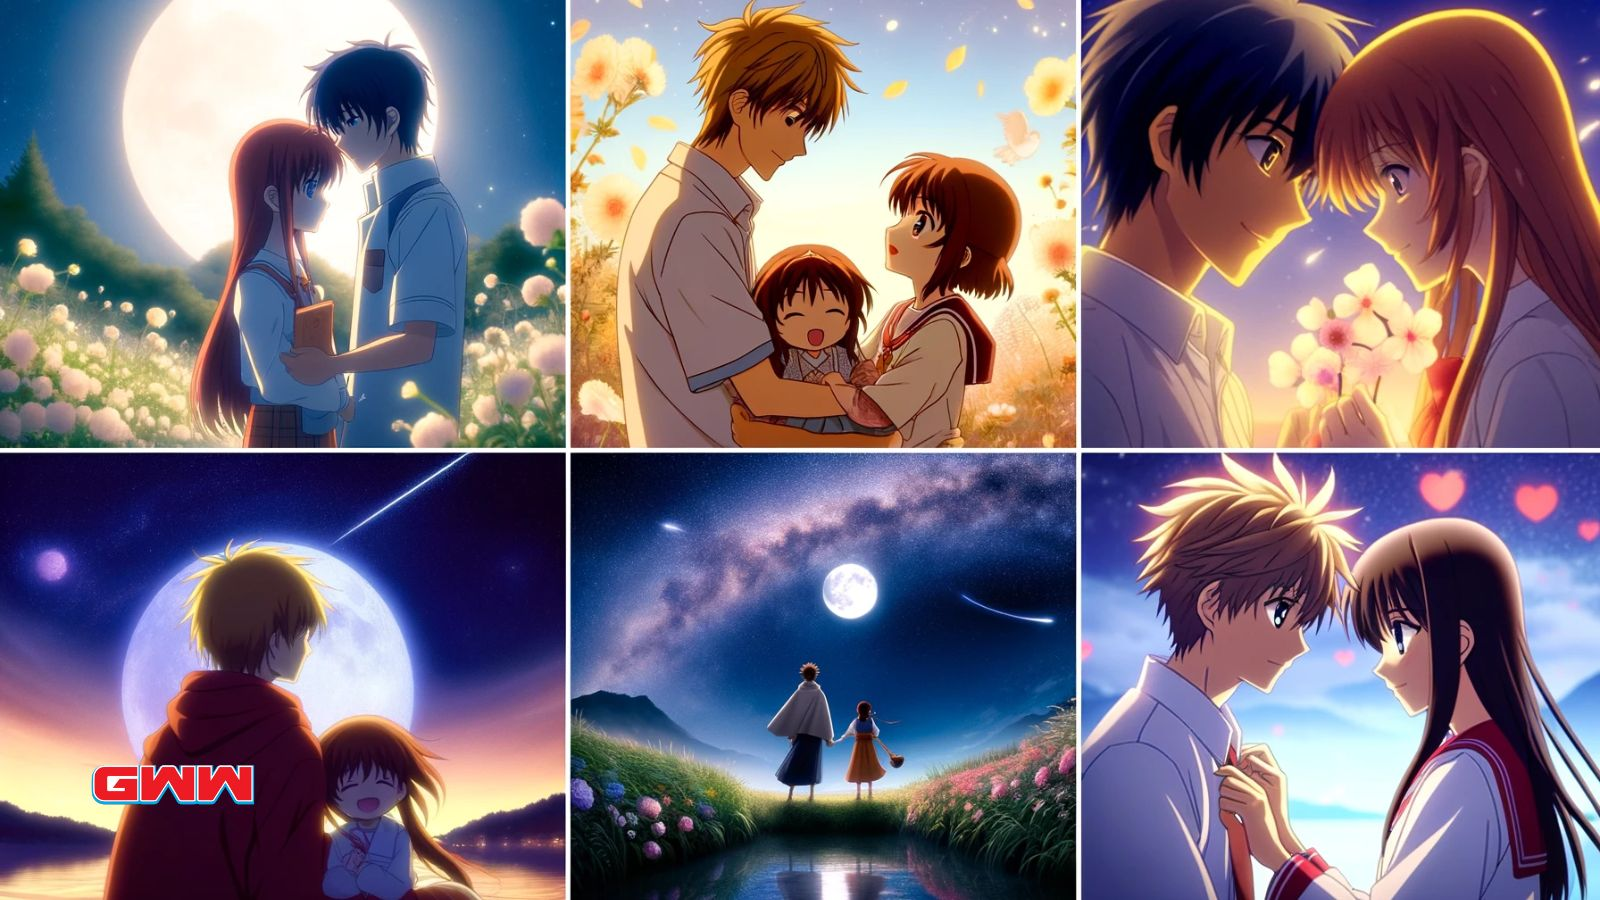 Scenes from Clannad, Toradora, Fruits Basket in best love romance anime